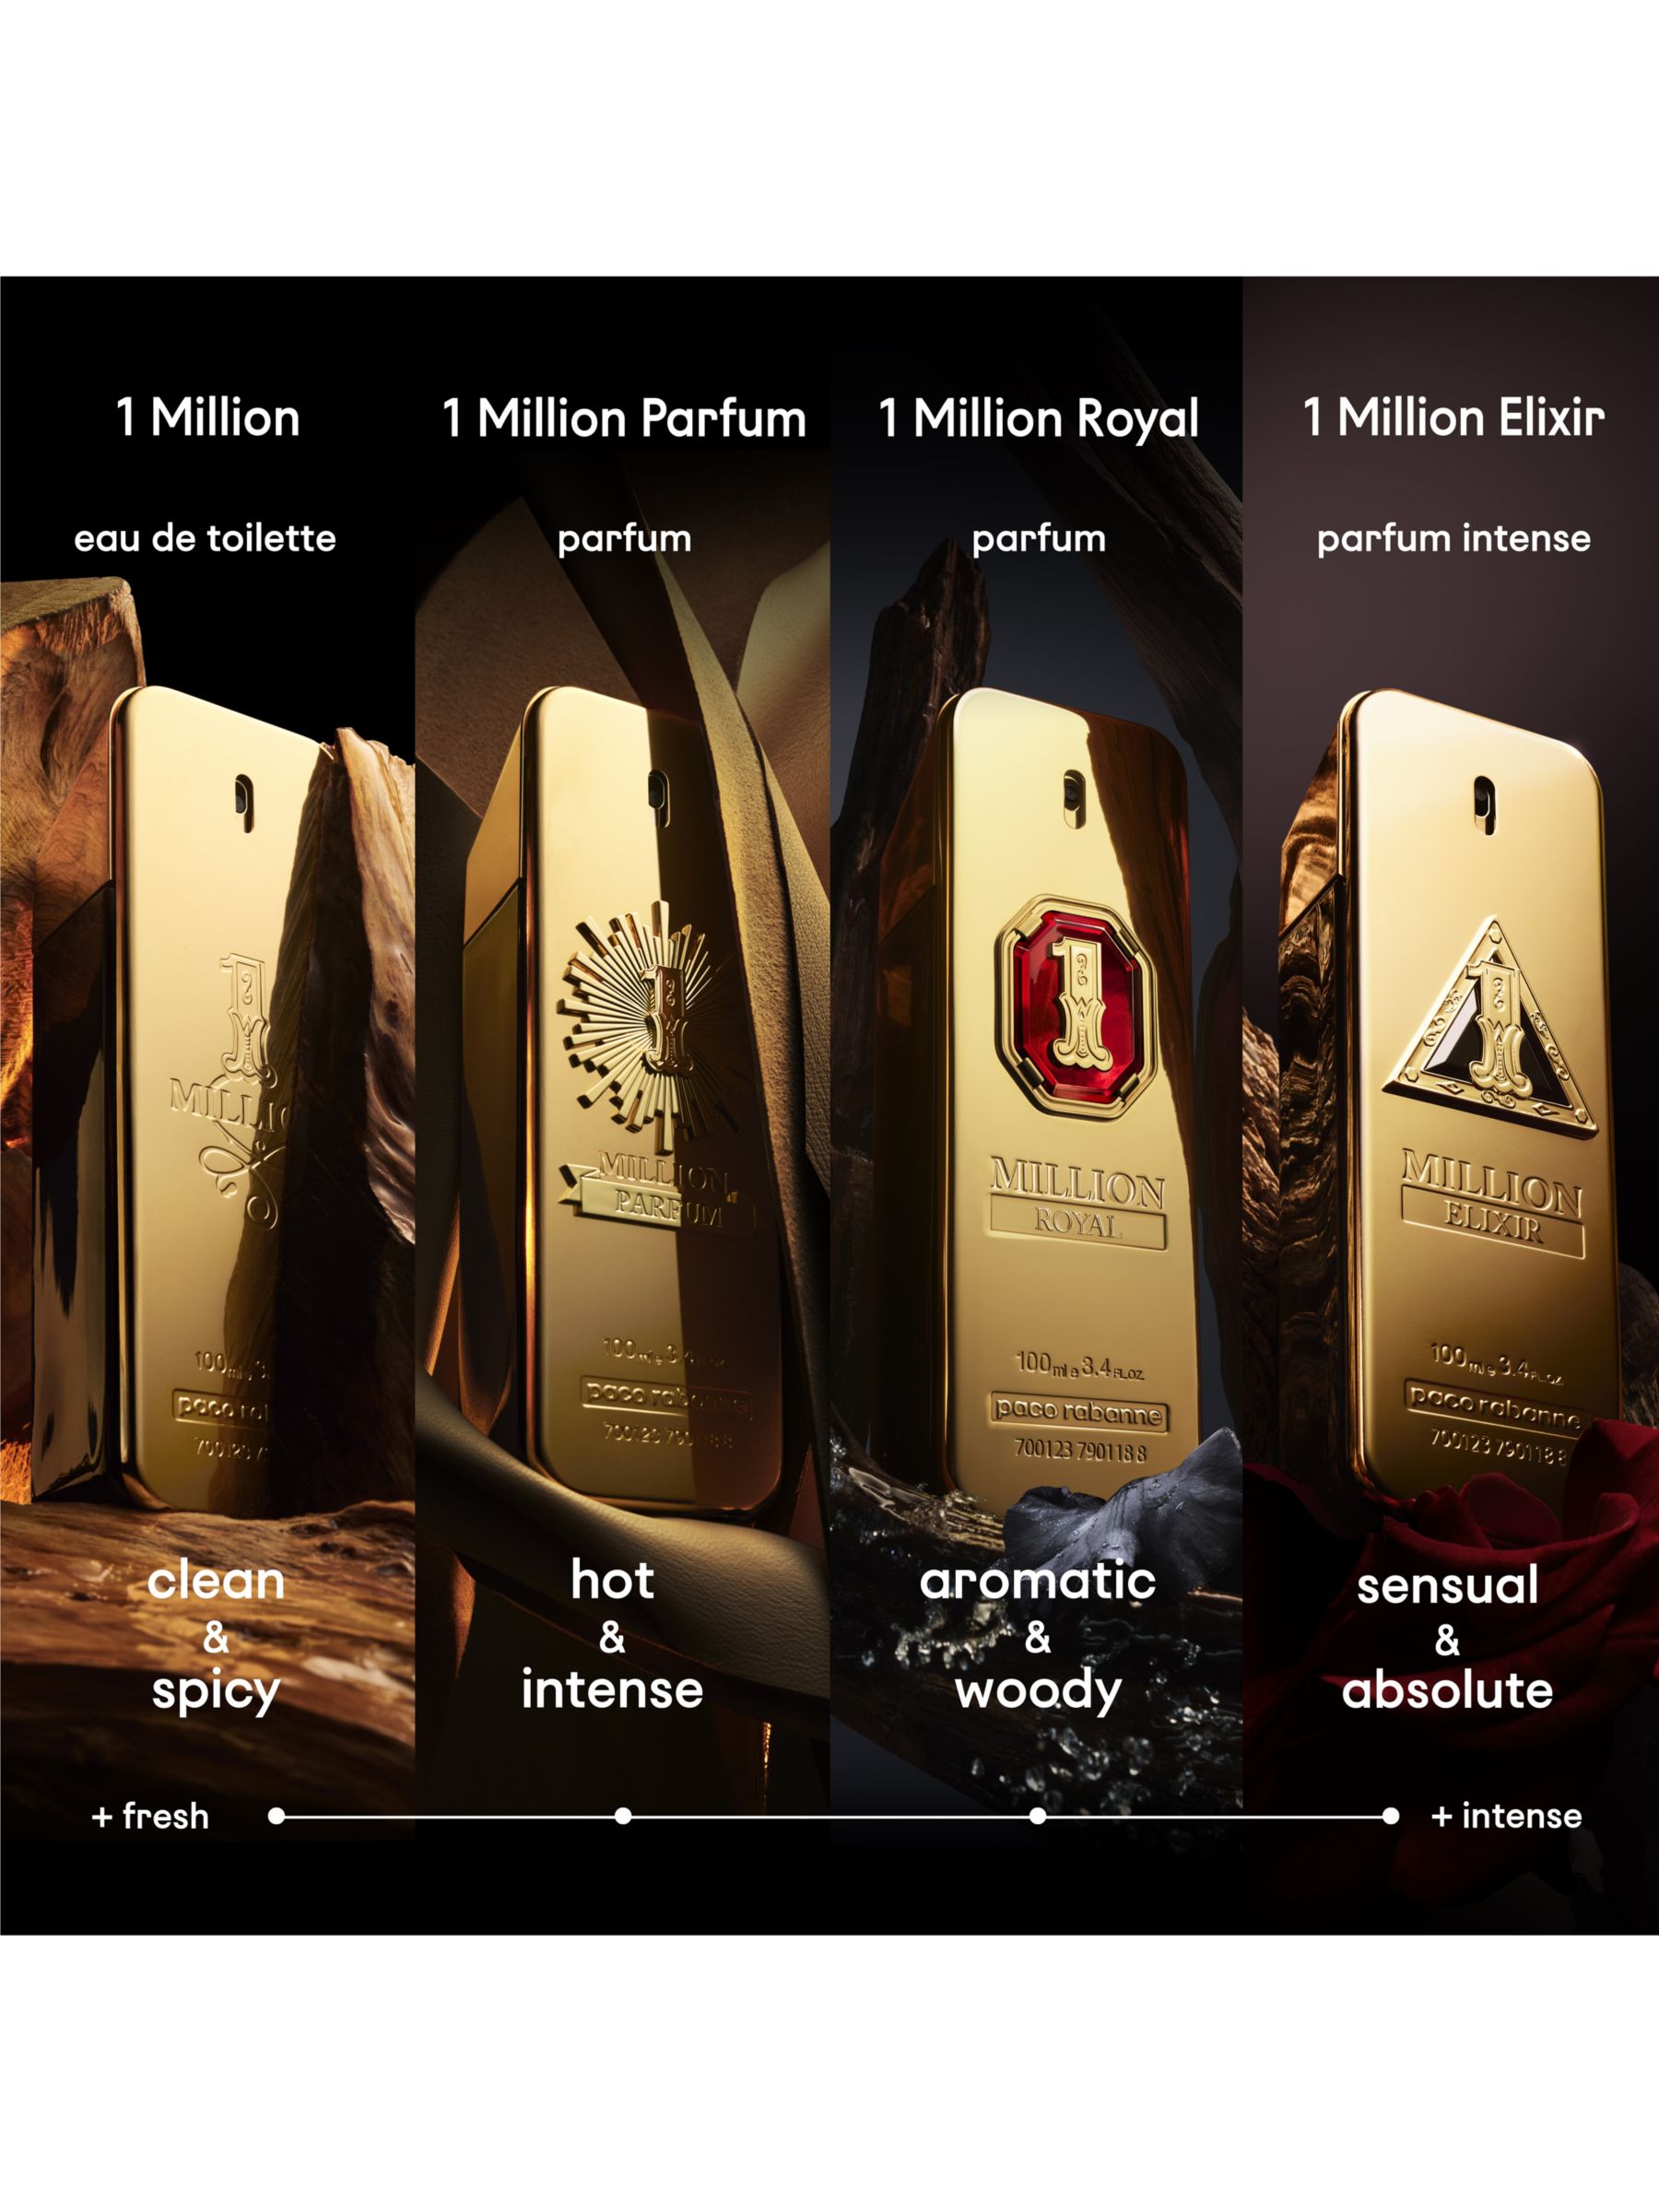 Paco Rabanne 1 Million Royal Parfum, 200ml at John Lewis & Partners